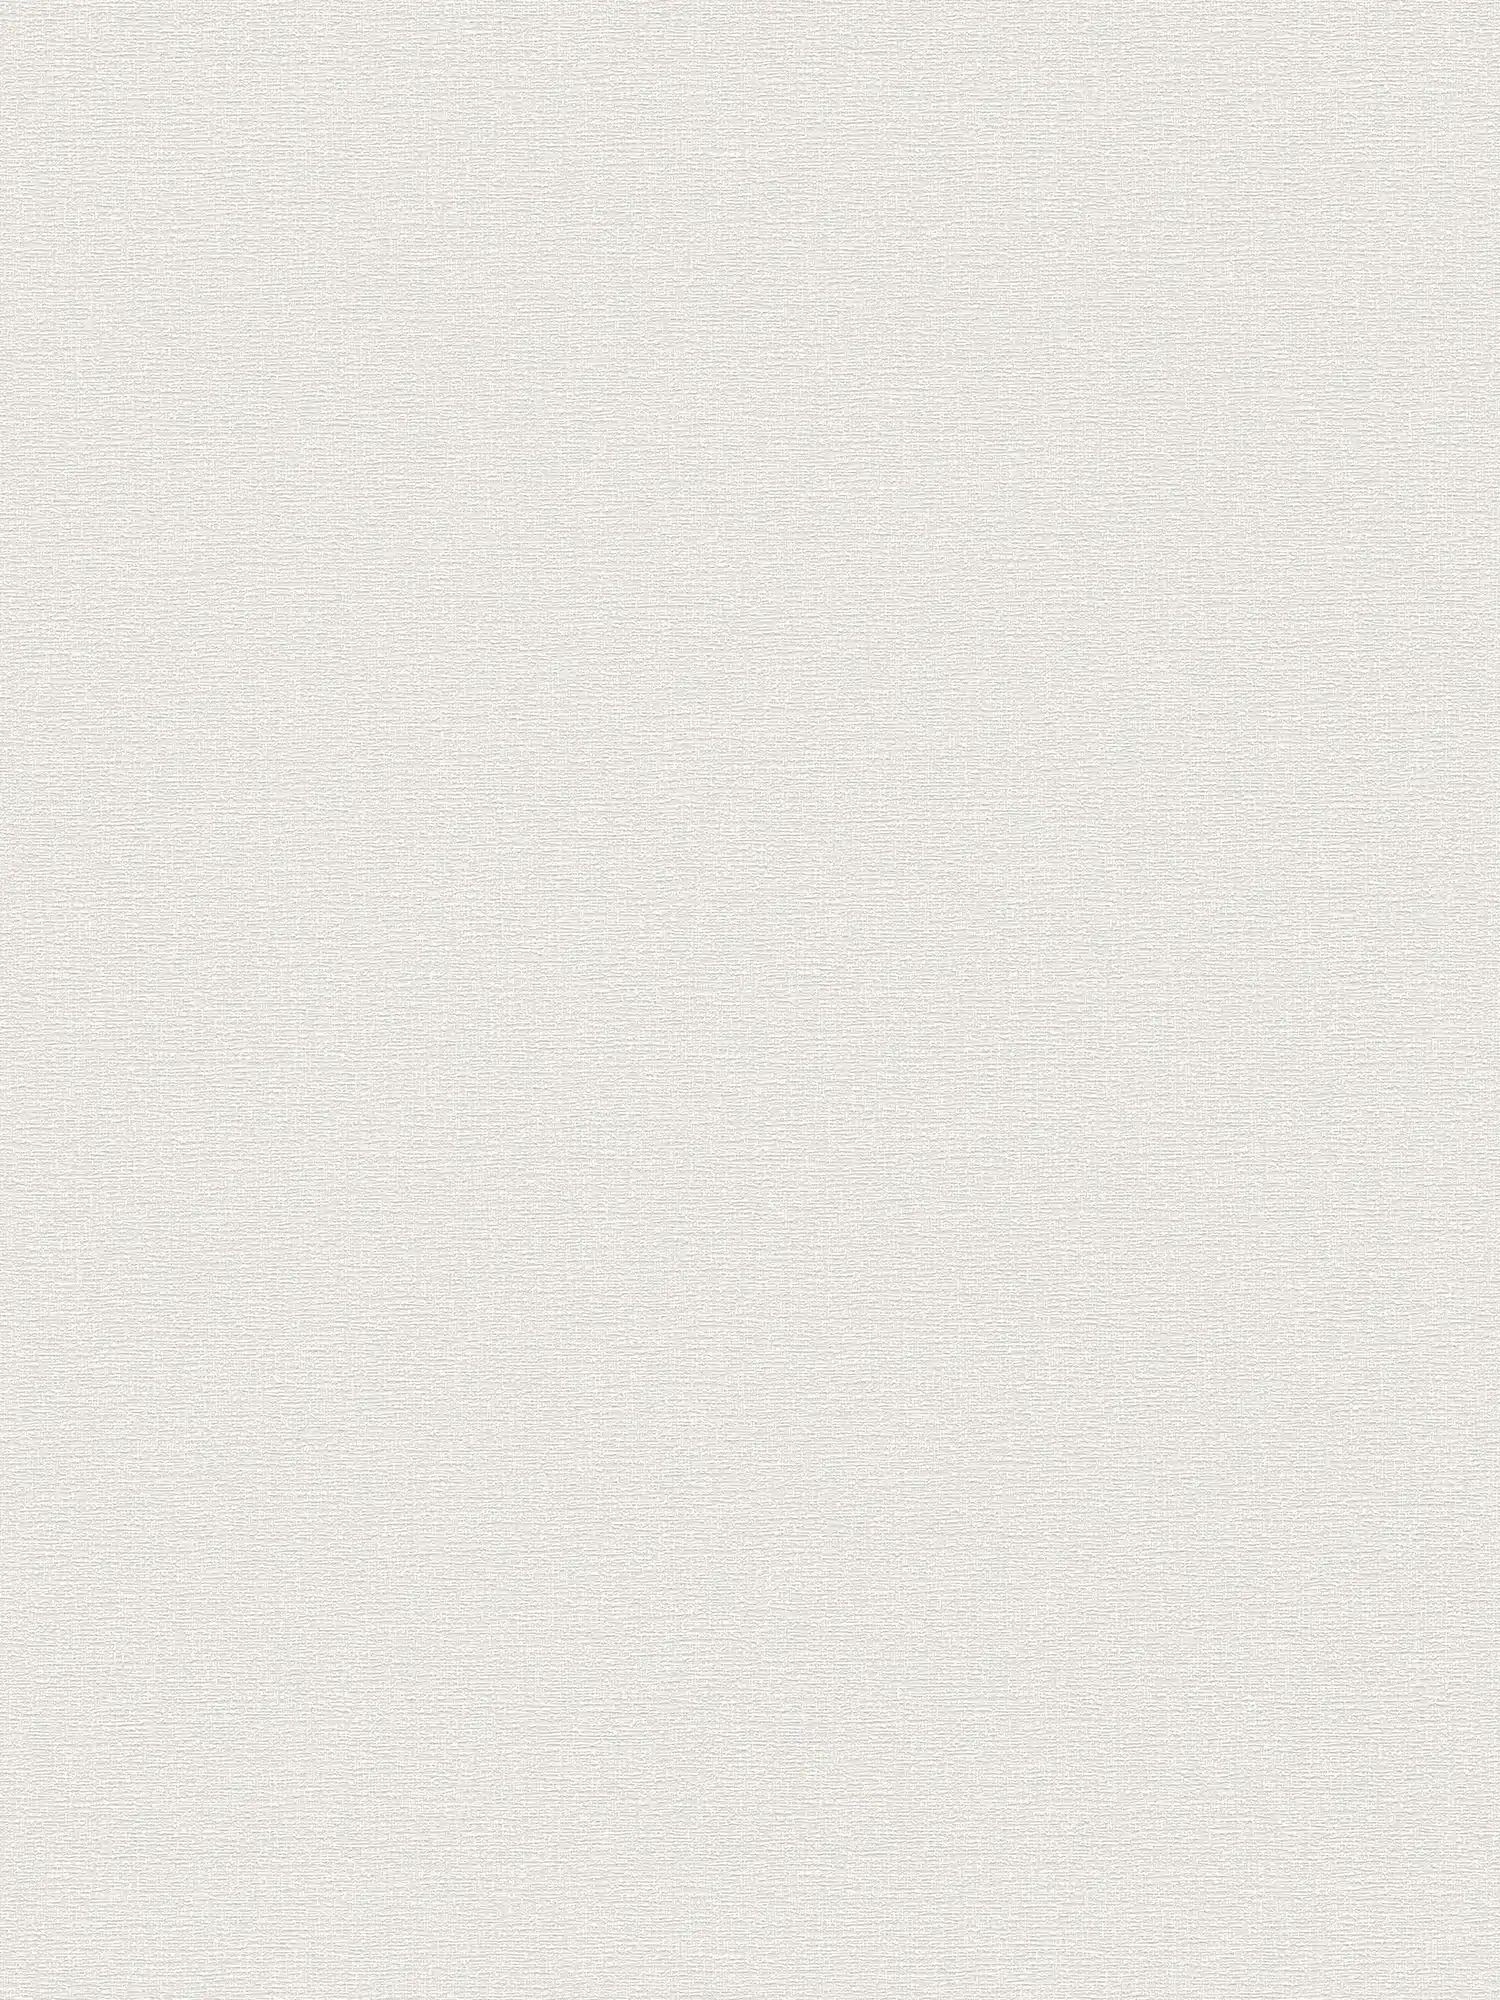 Plain plain wallpaper in a simple colour tone - light grey, cream
